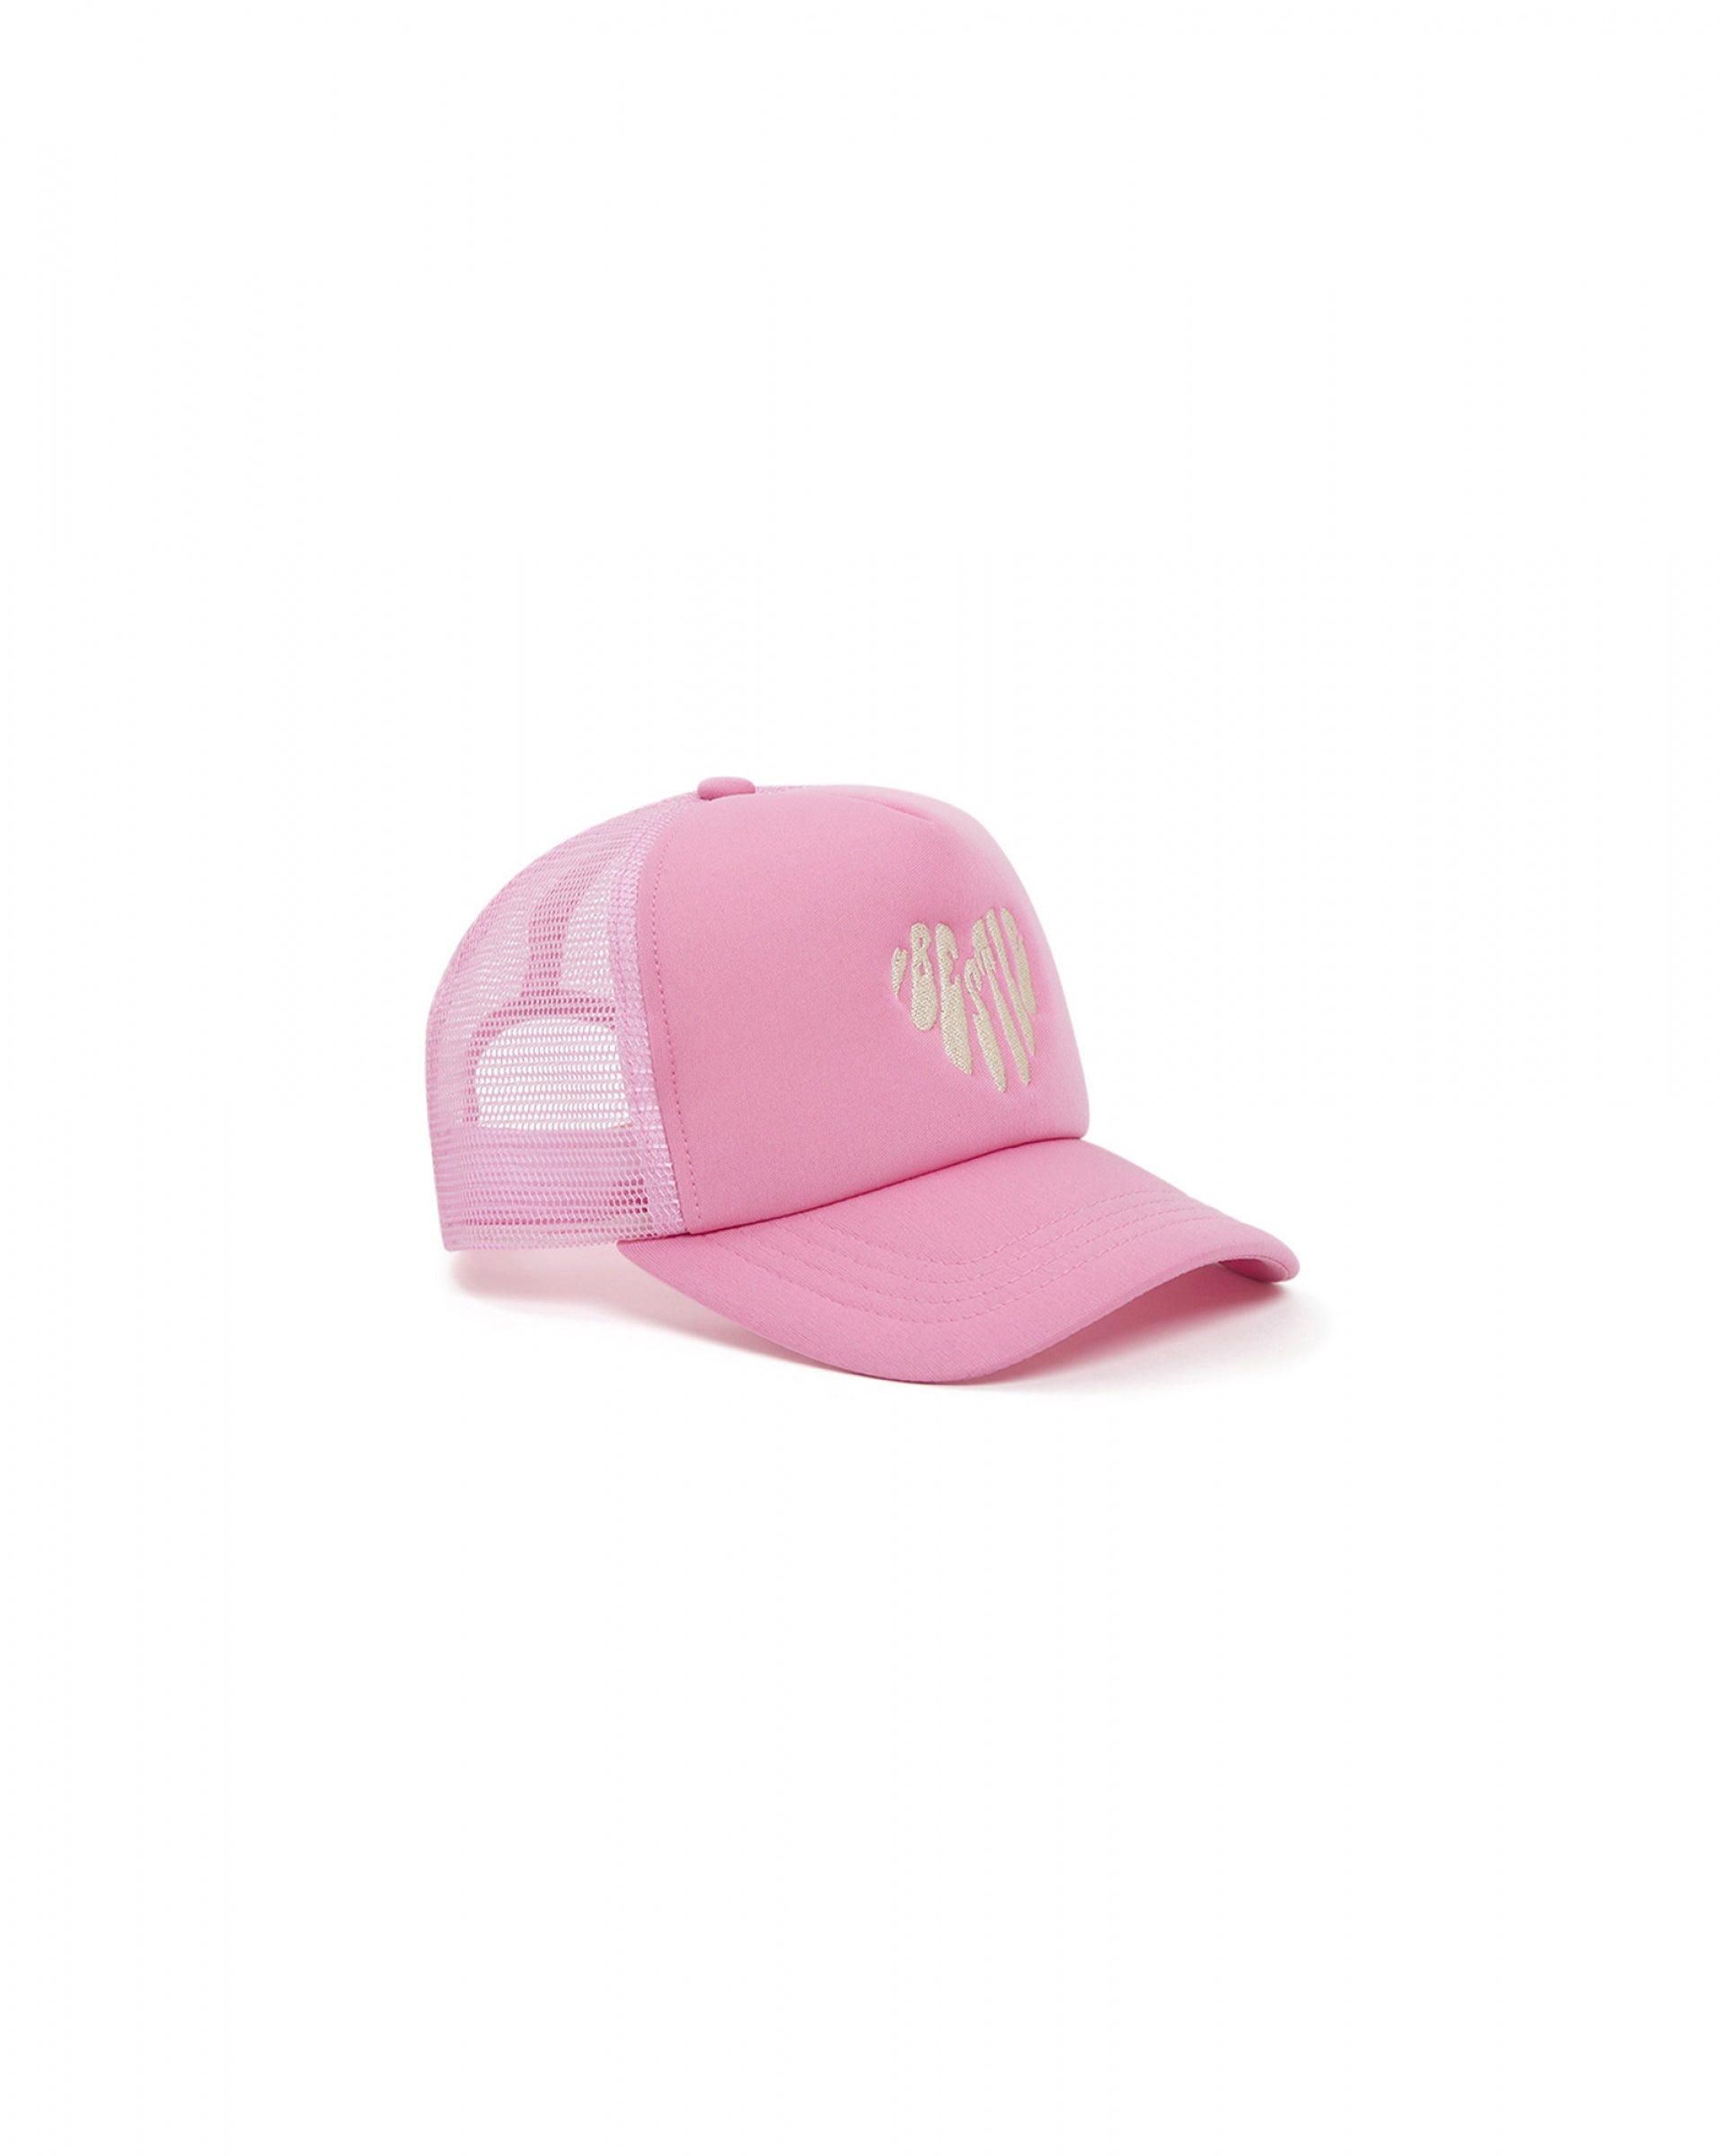 Girls Pink Baseball cap